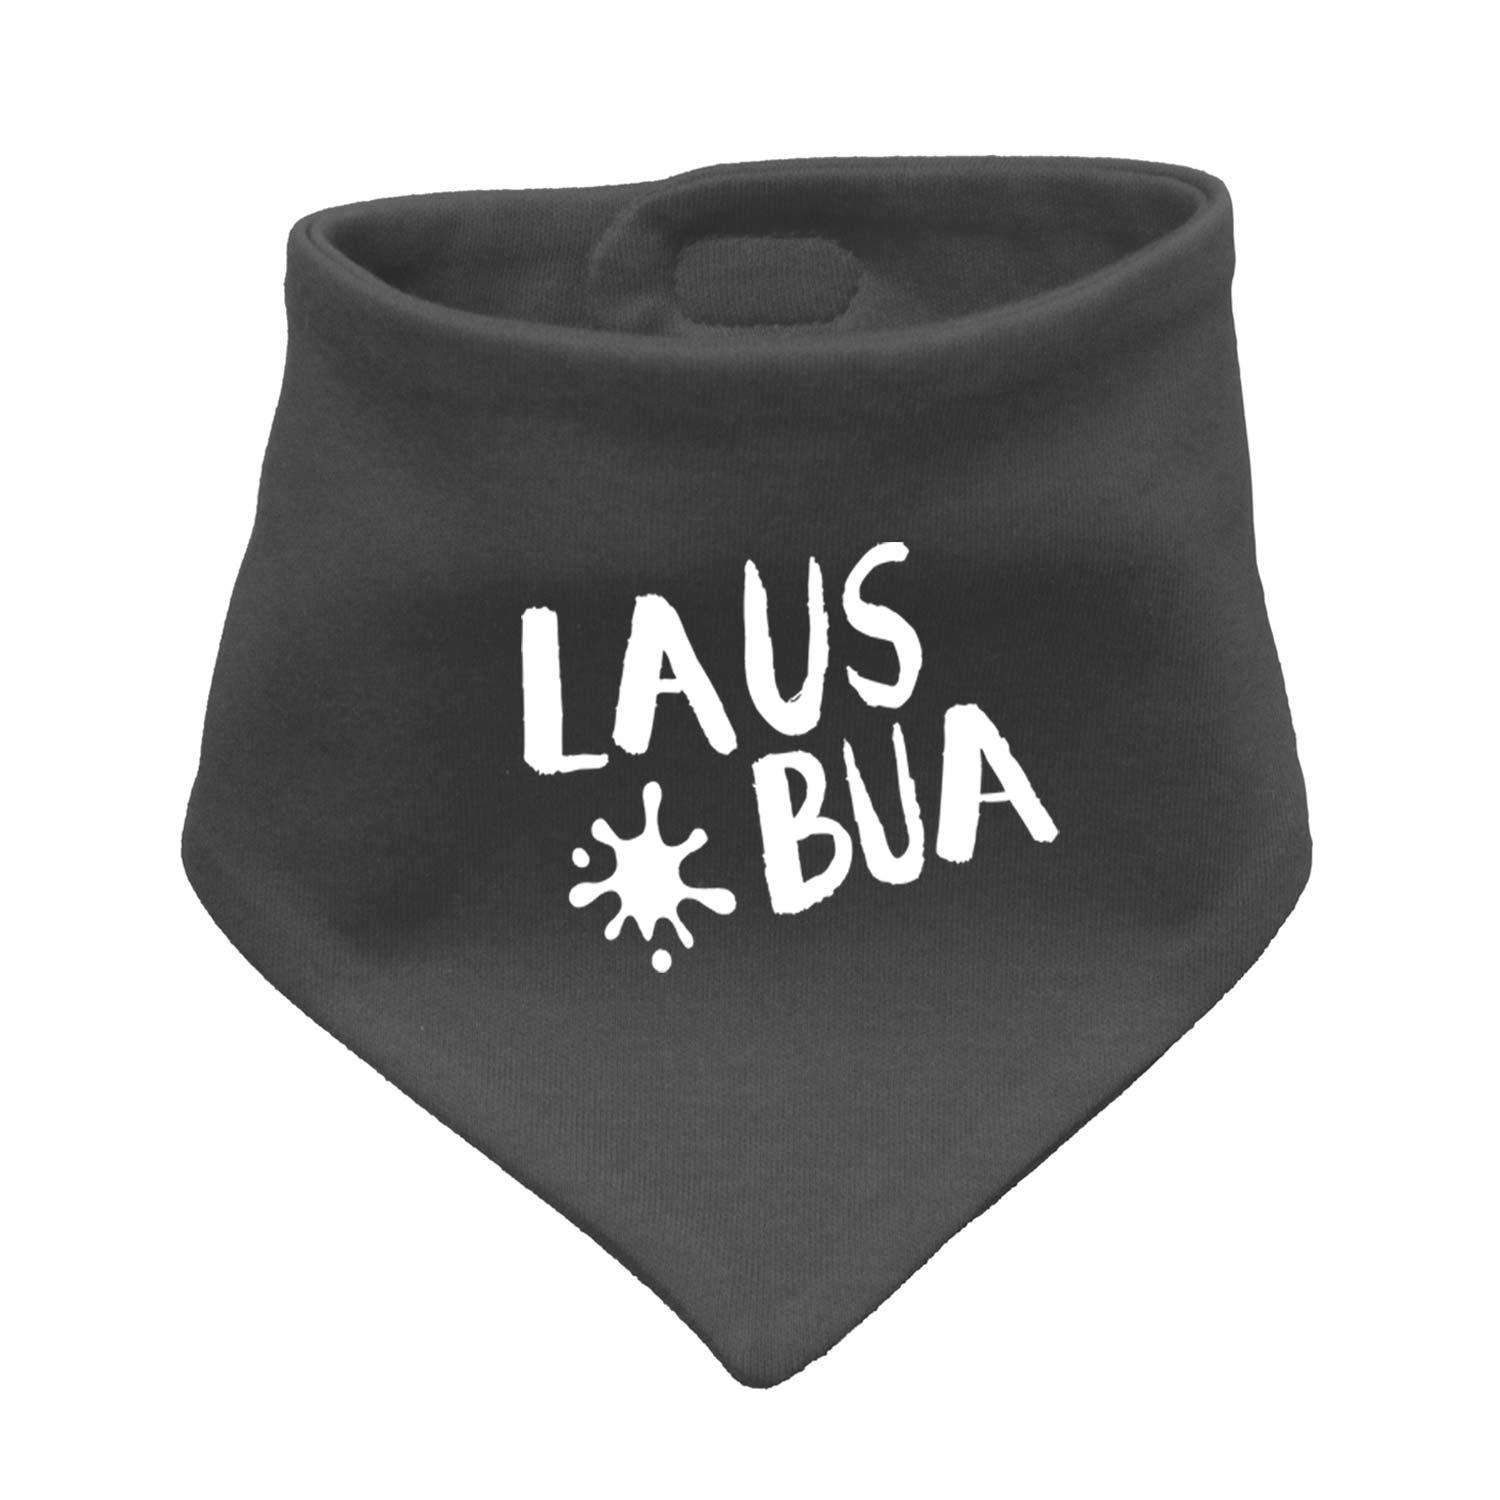 Babyhalstuch "Lausbua" - bavariashop - mei LebensGfui